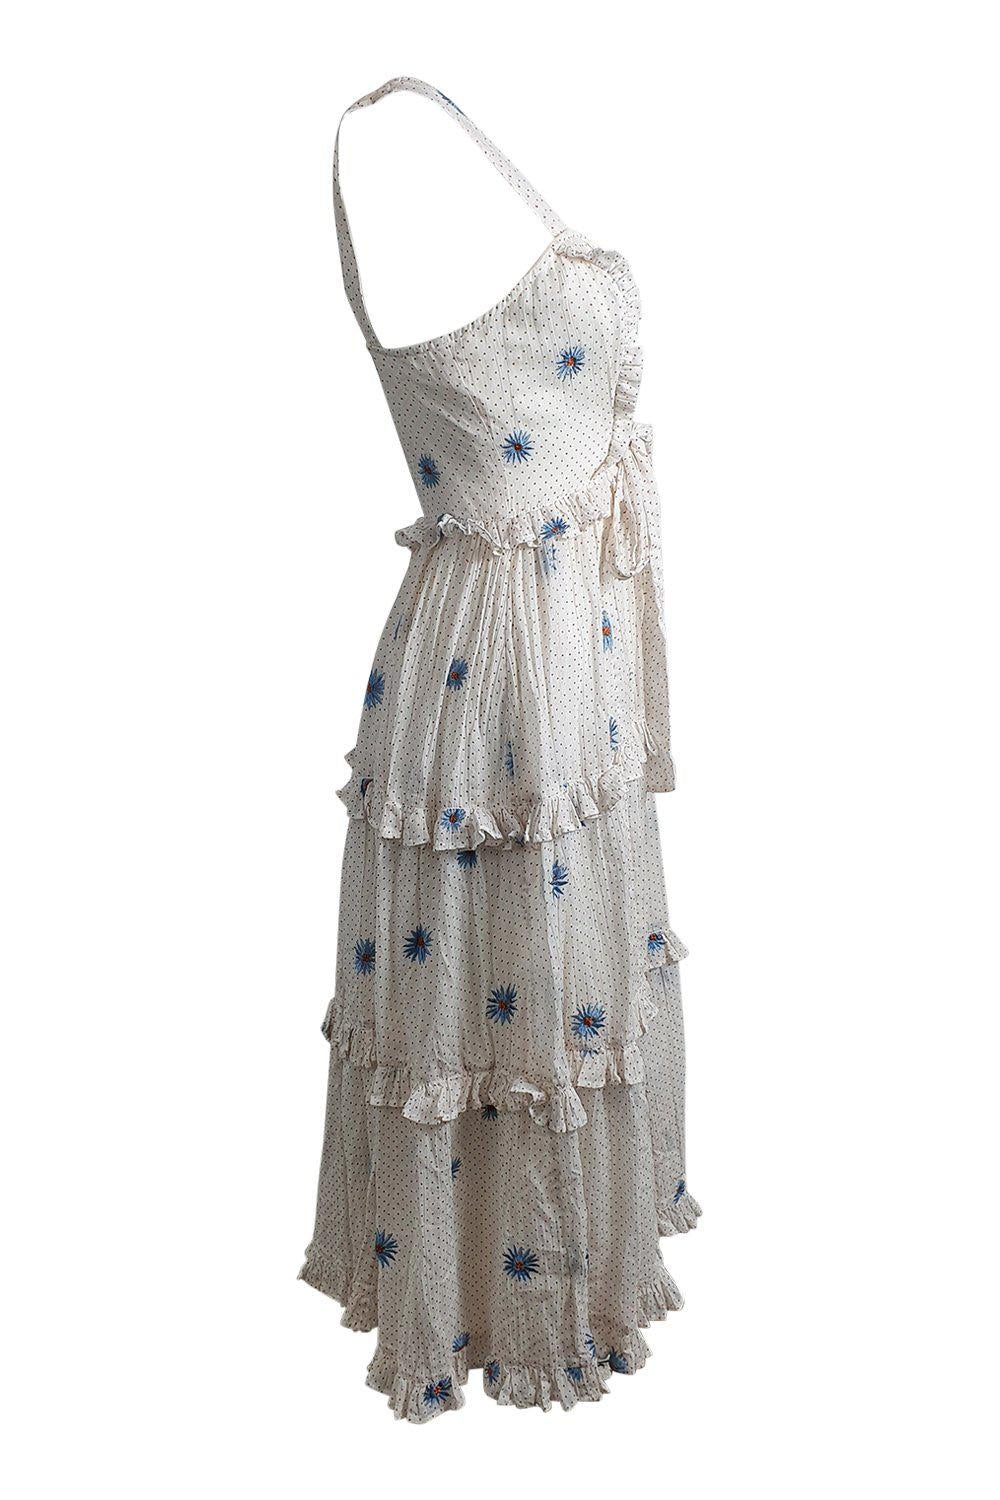 FREE PEOPLE White Polka Dot Floral Modern Boho Daisy Chain Midi Dress (XS)-The Freperie